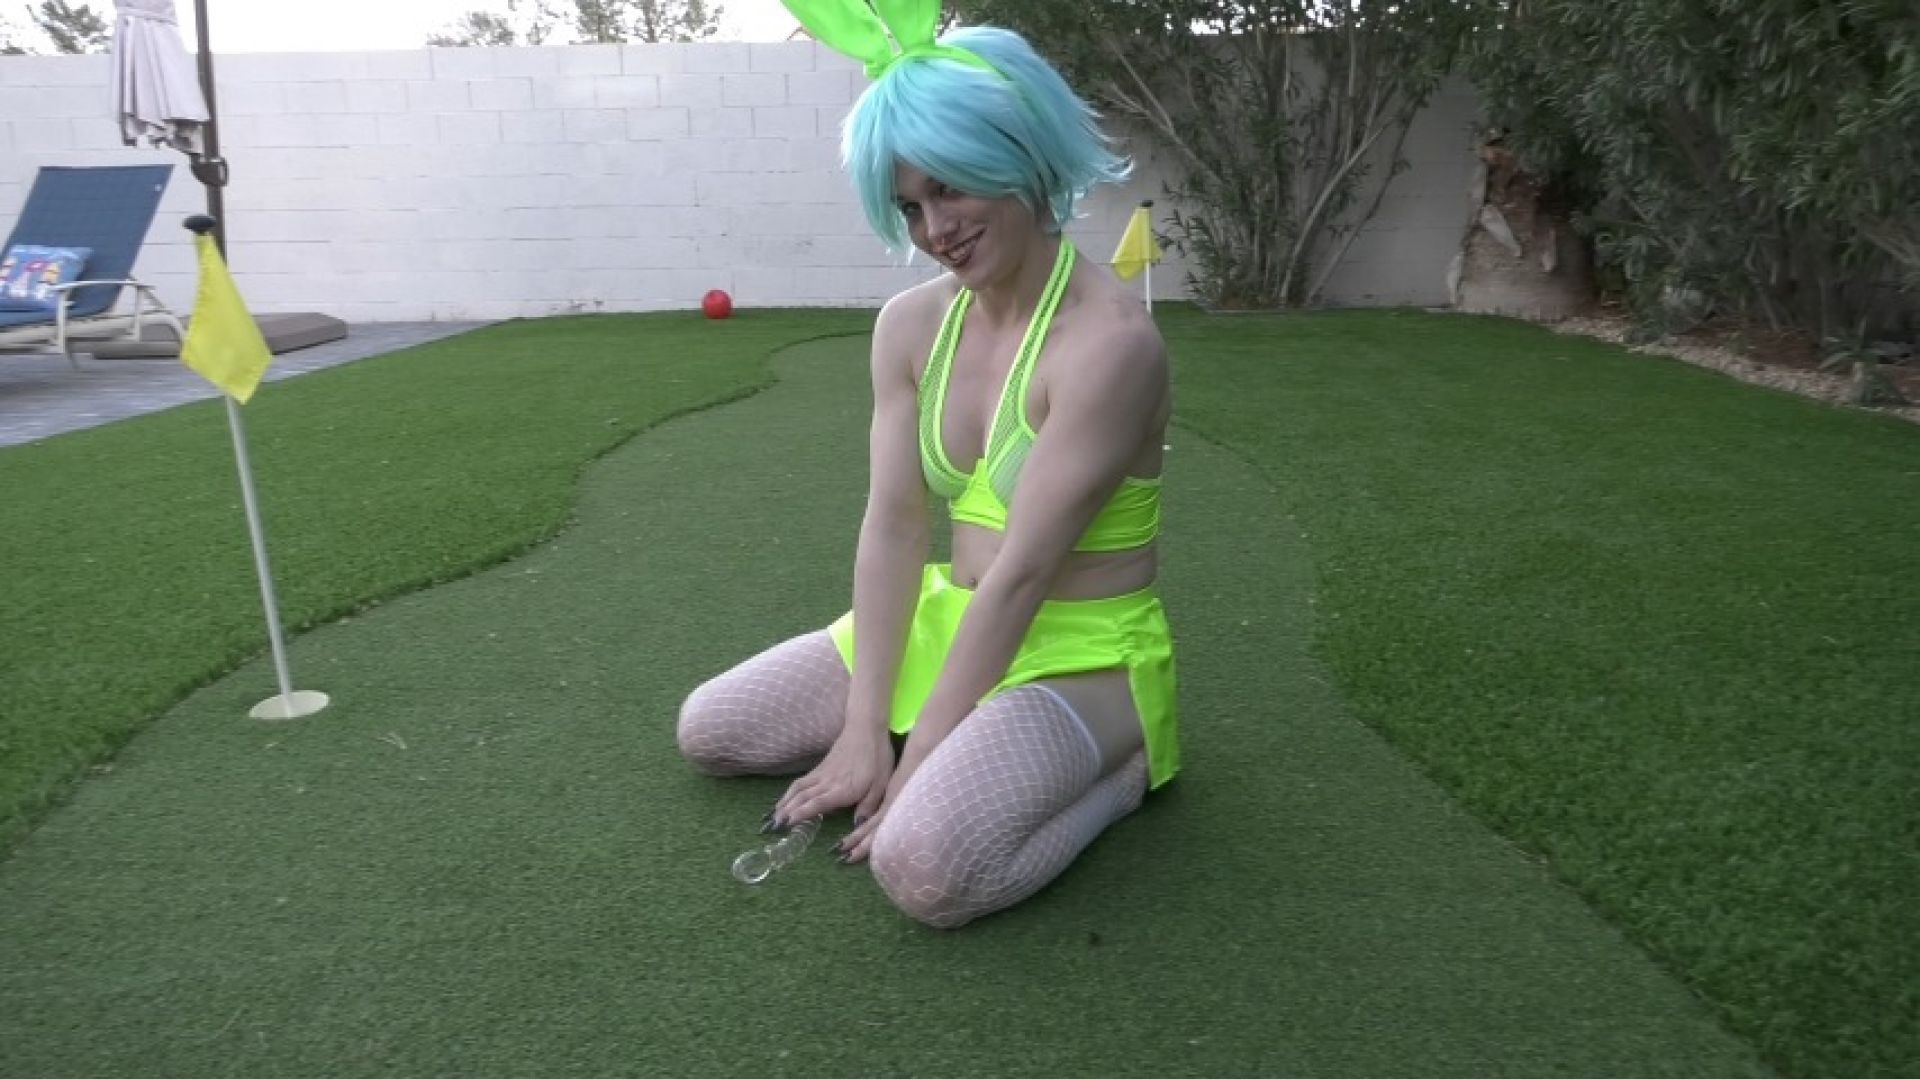 Bunny Girl on the Green